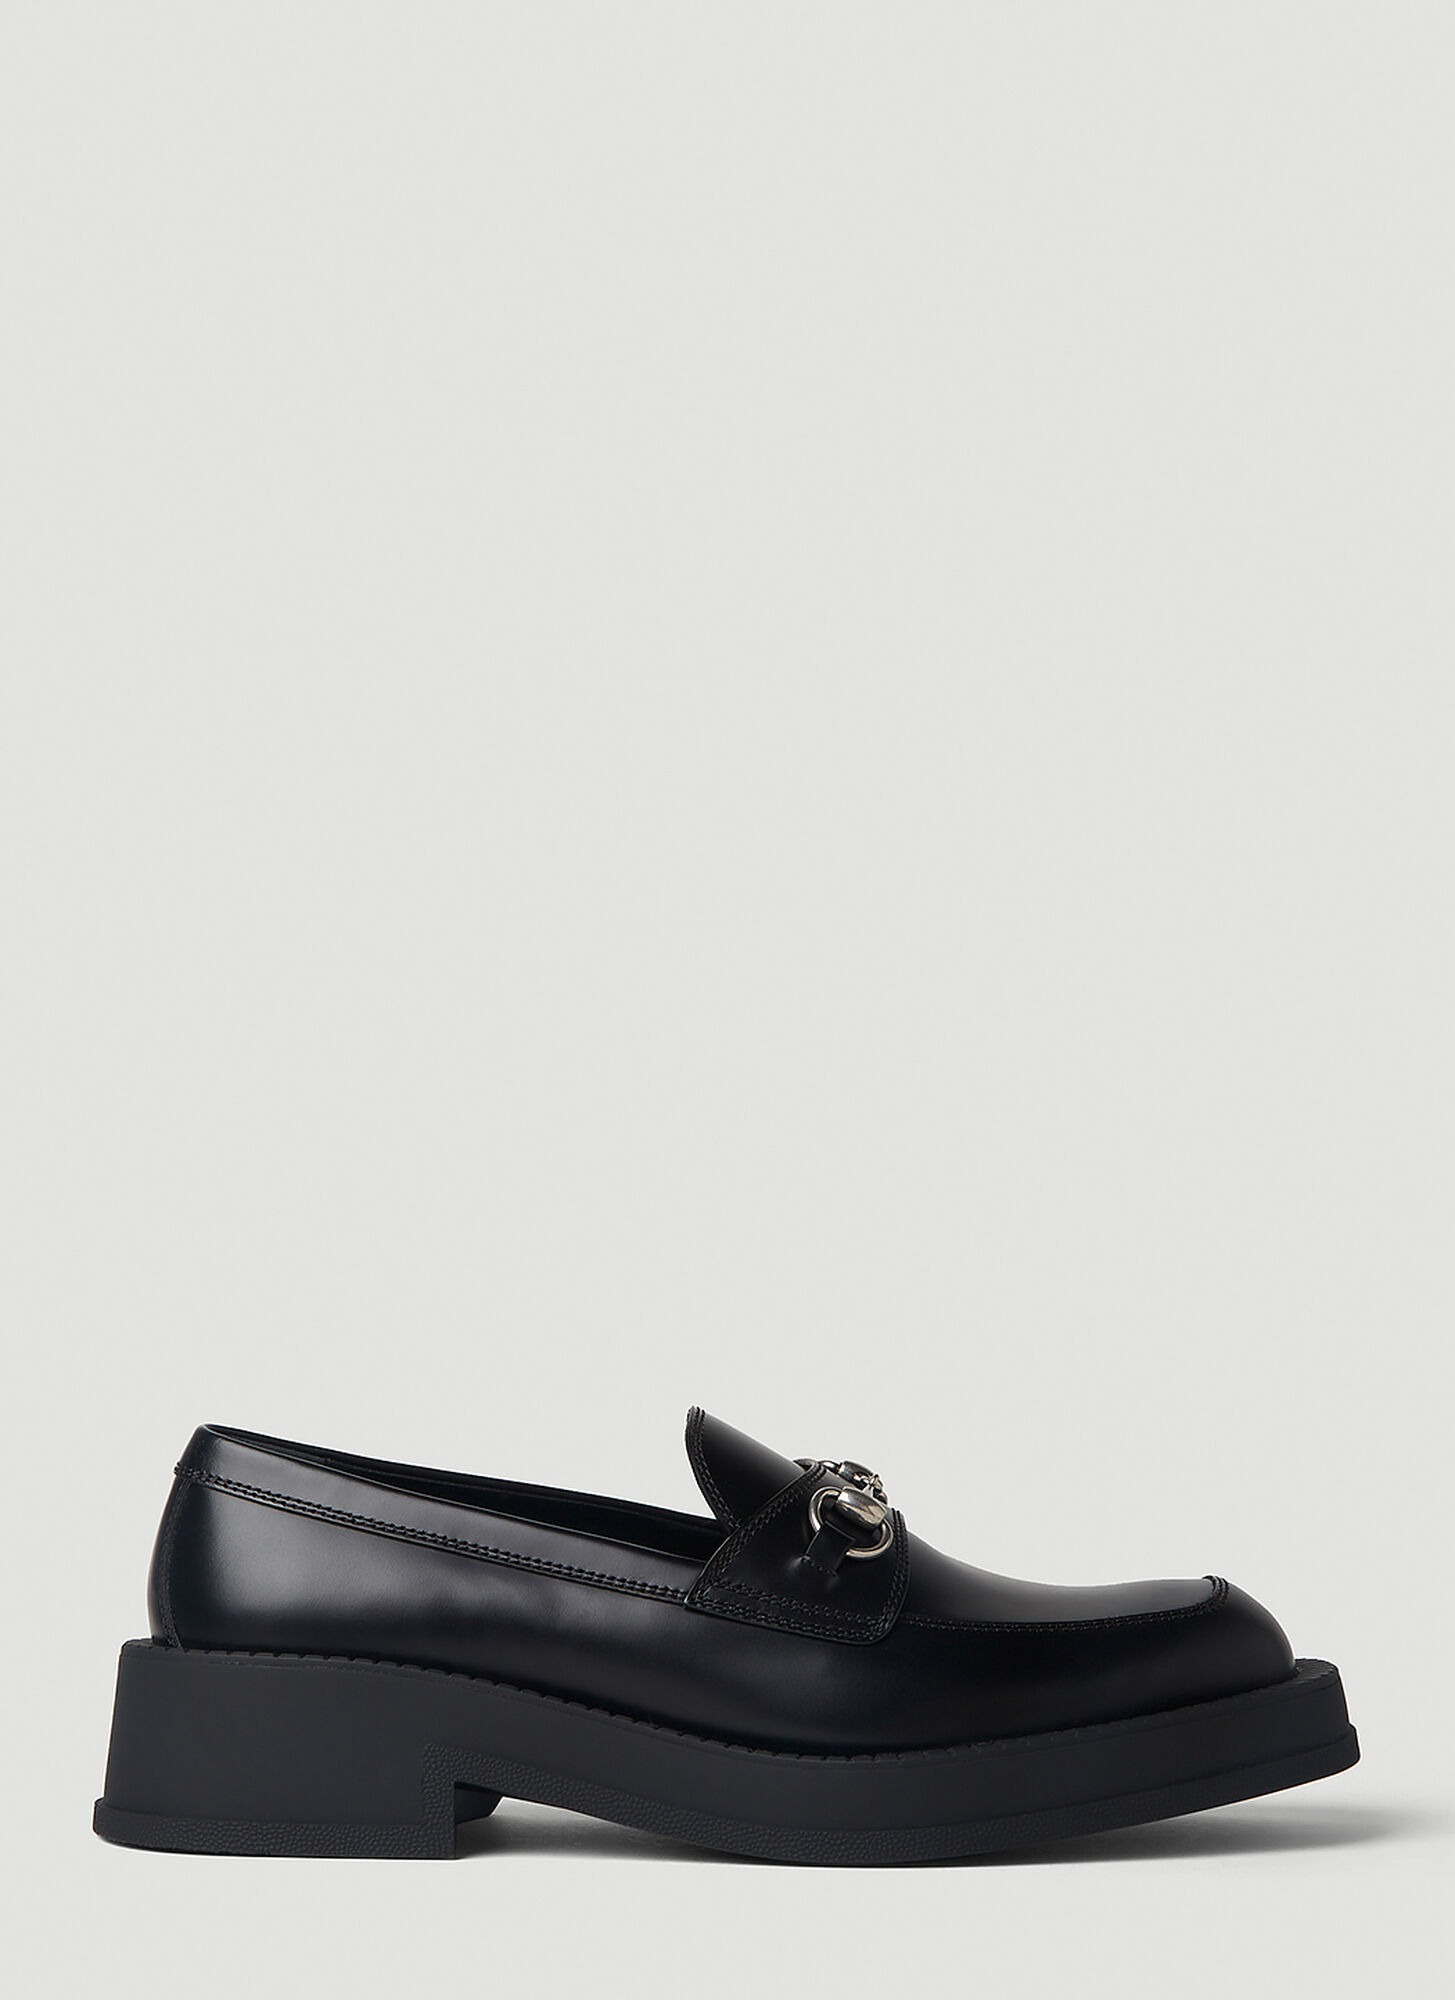 Gucci Horsebit Loafers Male Black